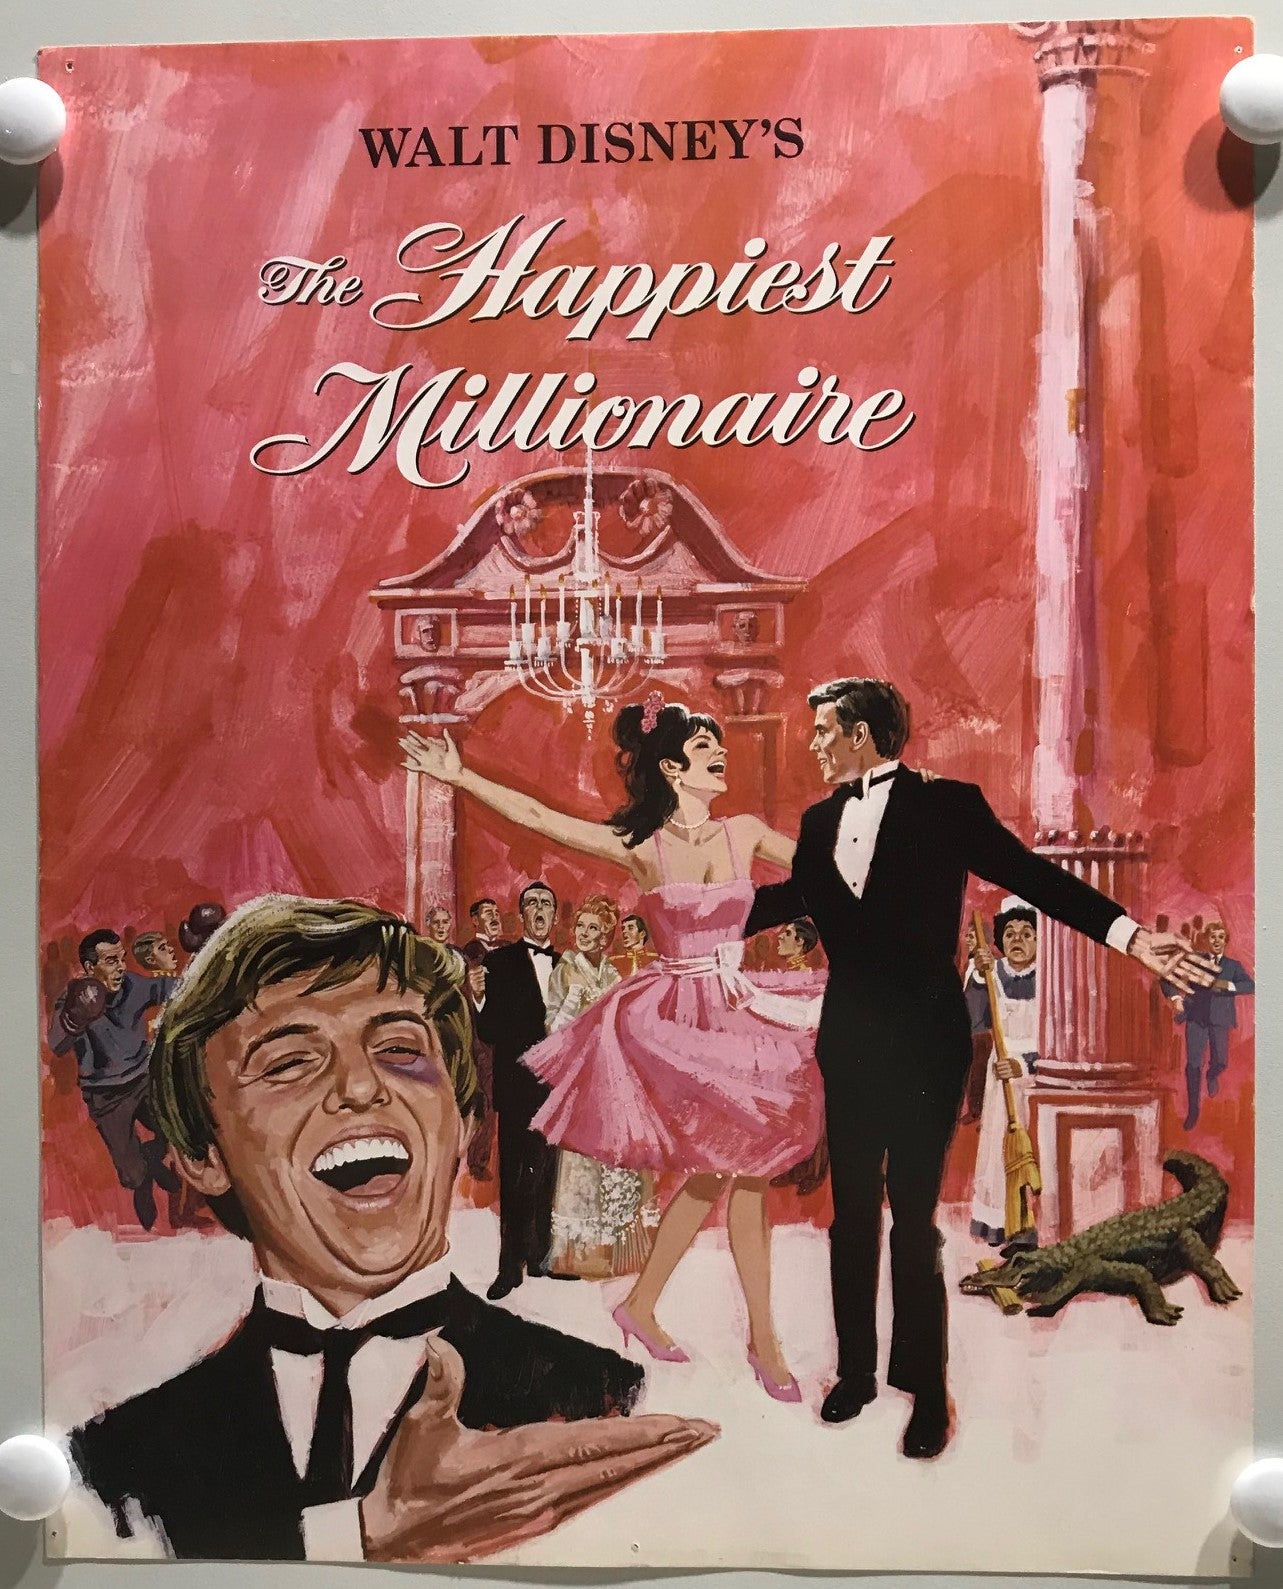 ORIGINAL LOBBY CARD - THE HAPPIEST MILLIONAIRE (a) - 1967